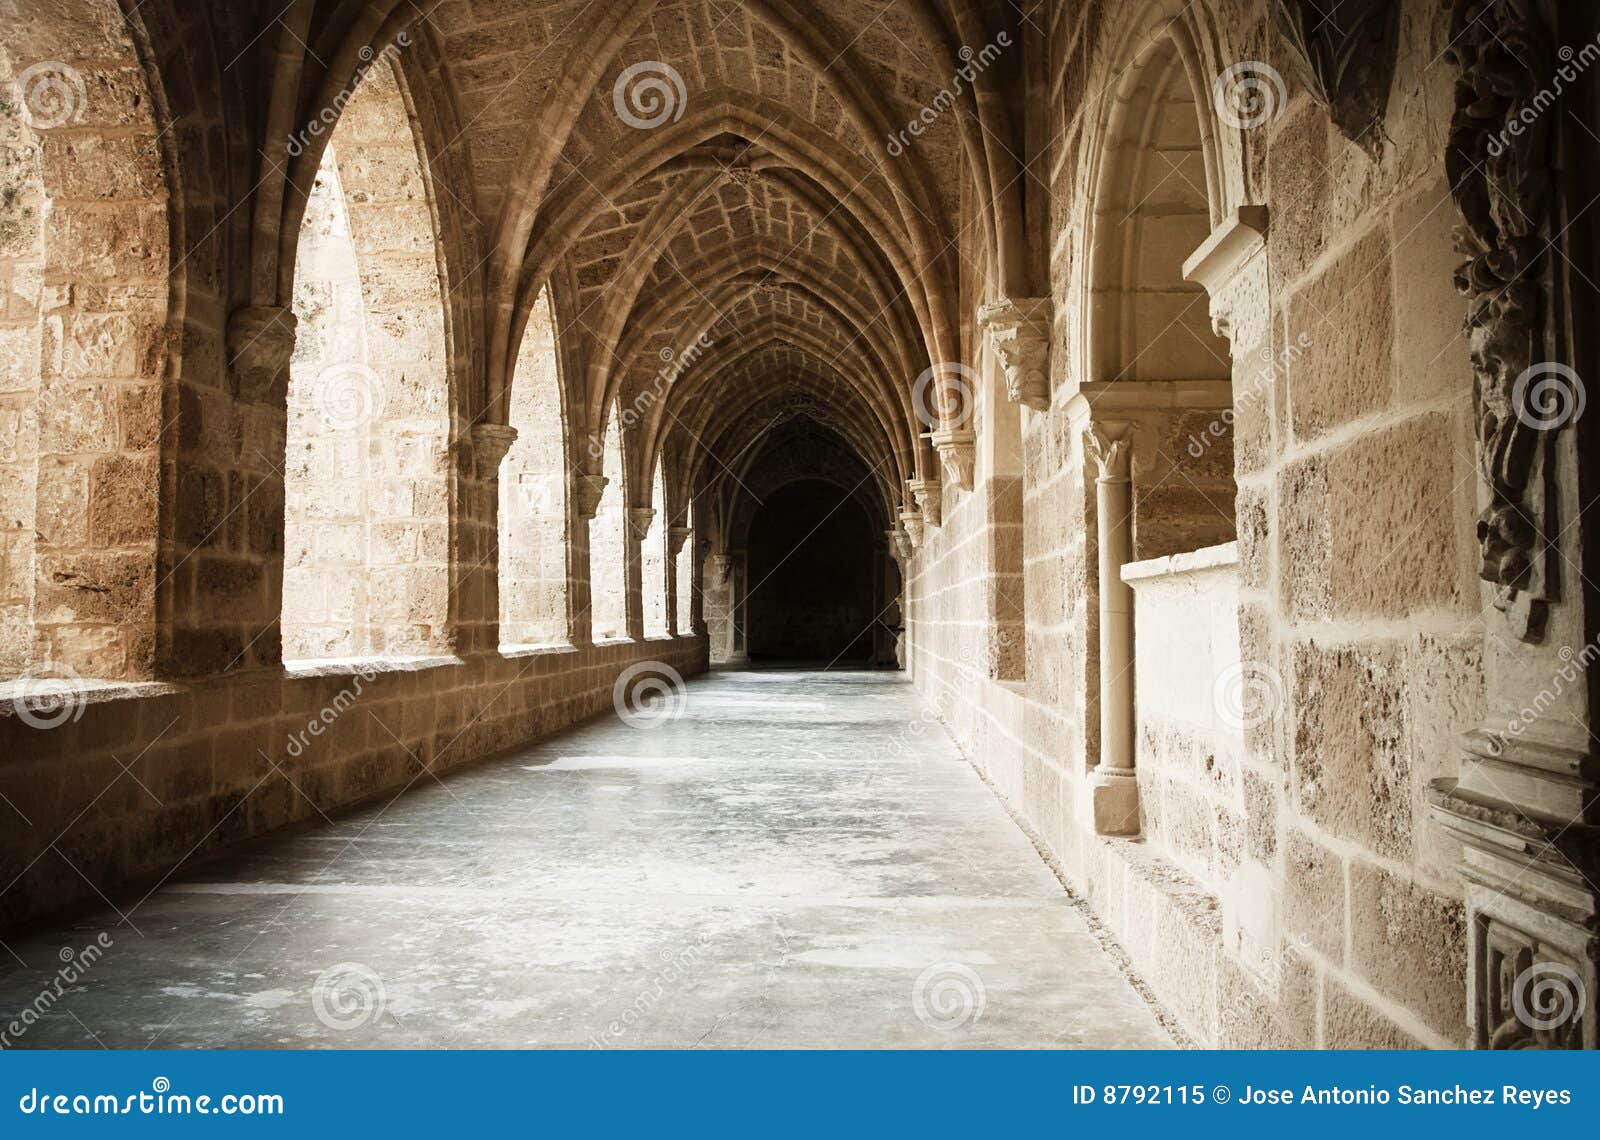 Monastery interior stock image. Image of inside, heritage - 8792115